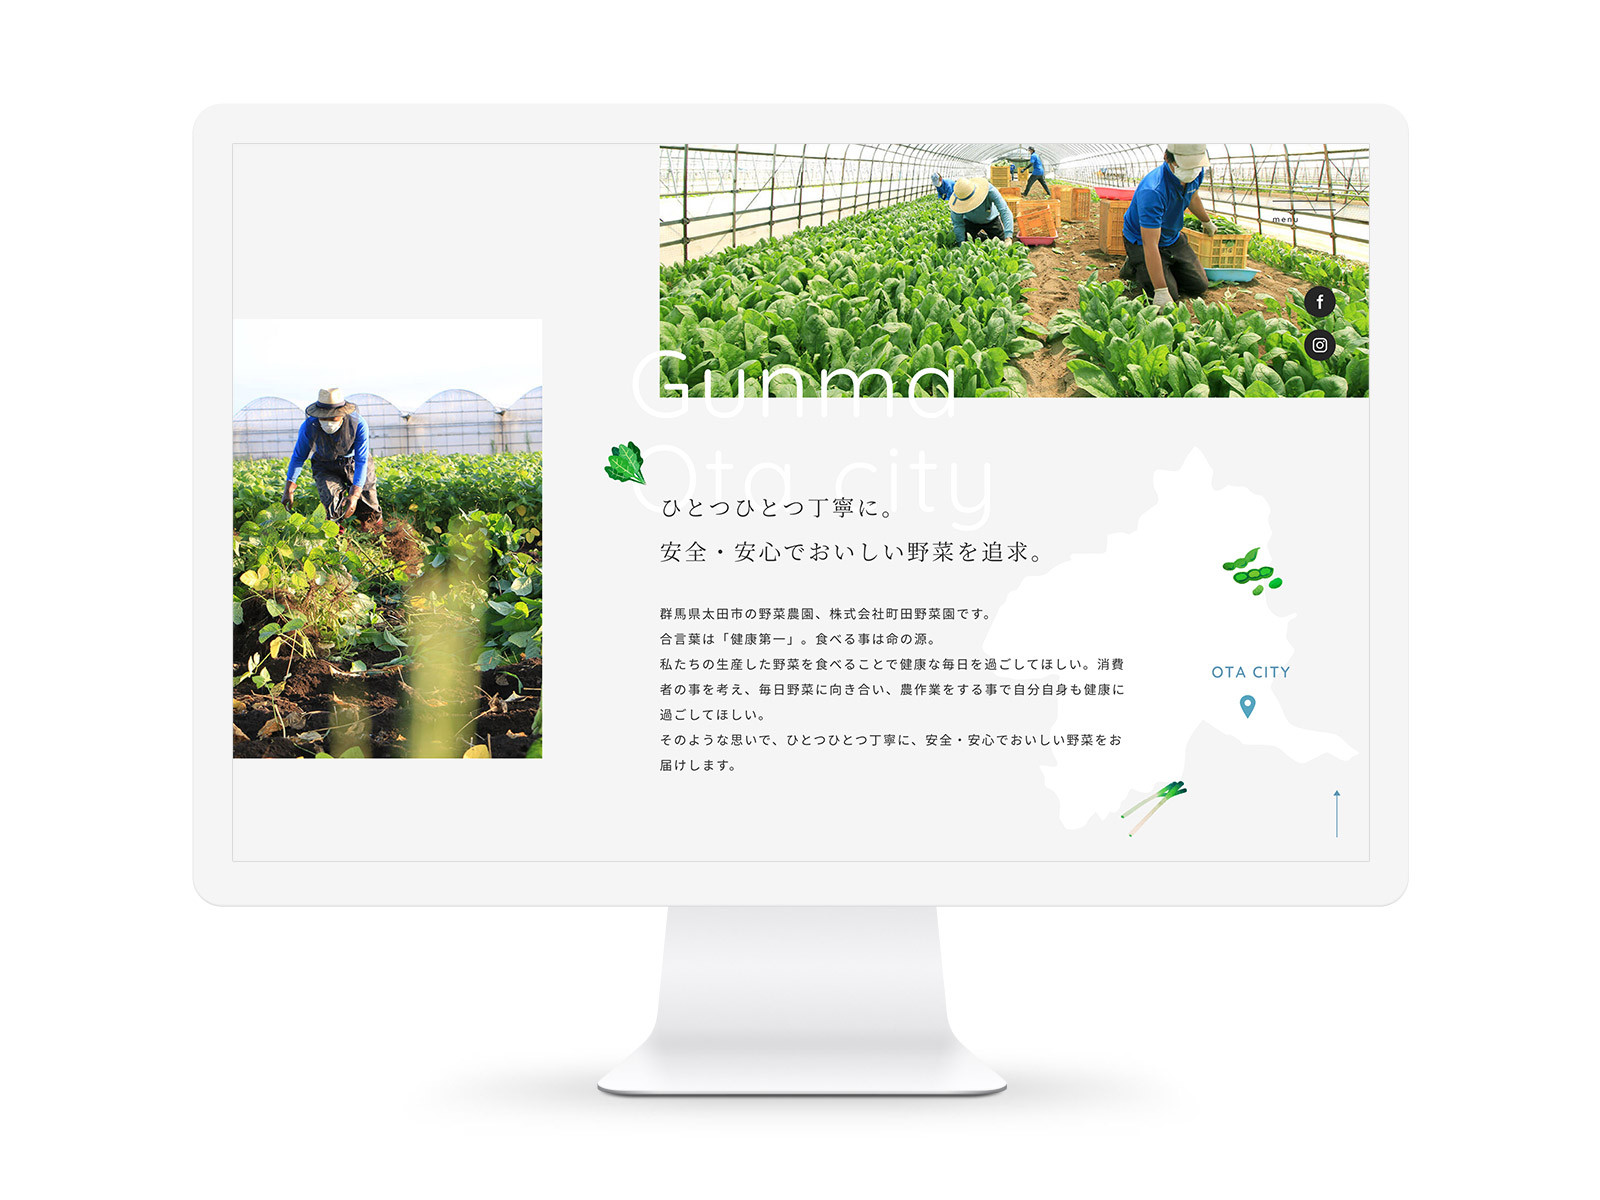 Machida Vegetable Farm image